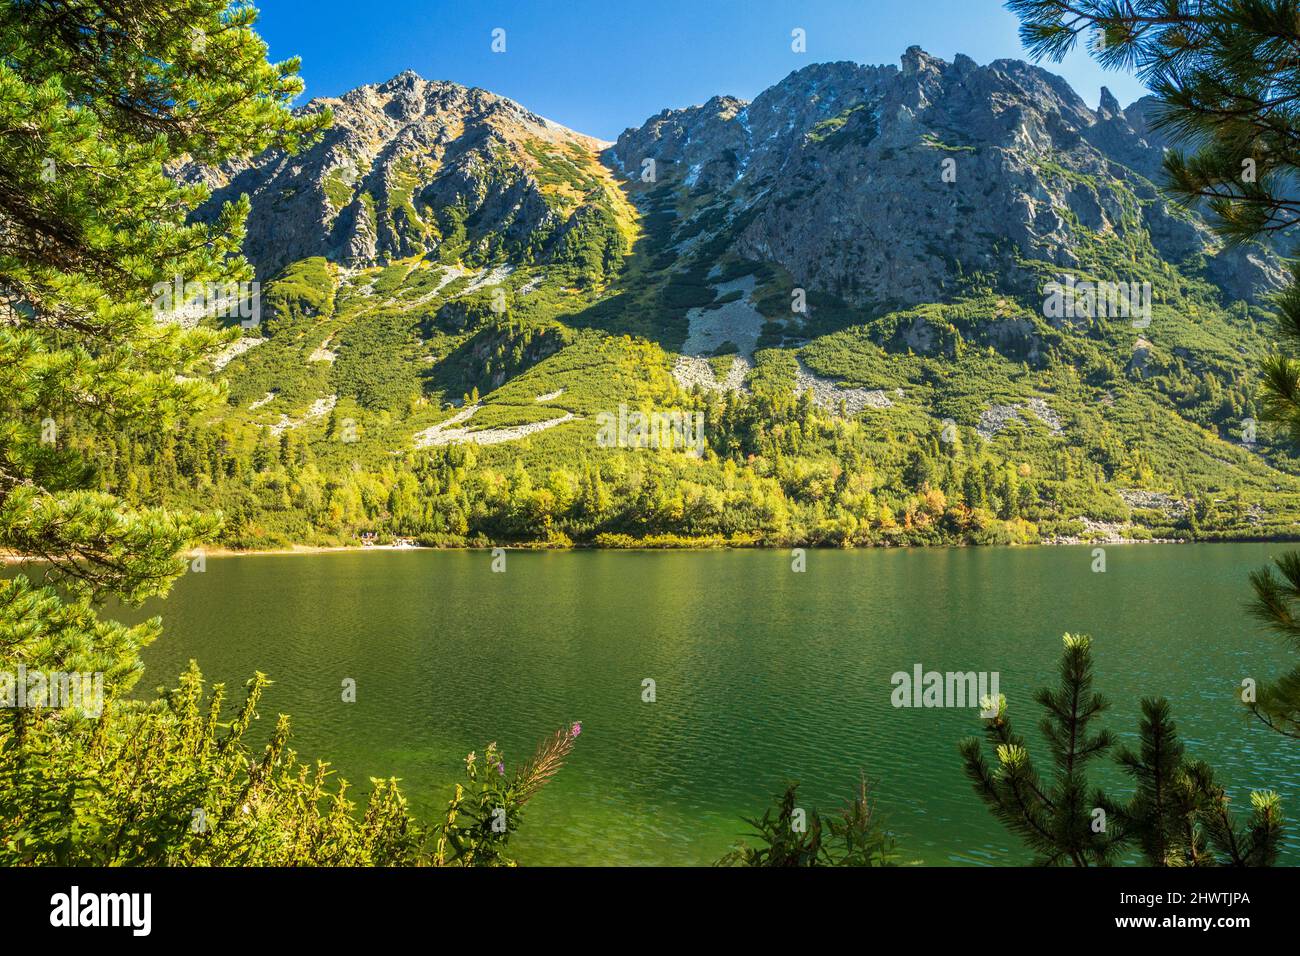 Mountain landscape at autumn season. The Popradske pleso lake in High Tatras National Park, Slovakia, Europe. Stock Photo